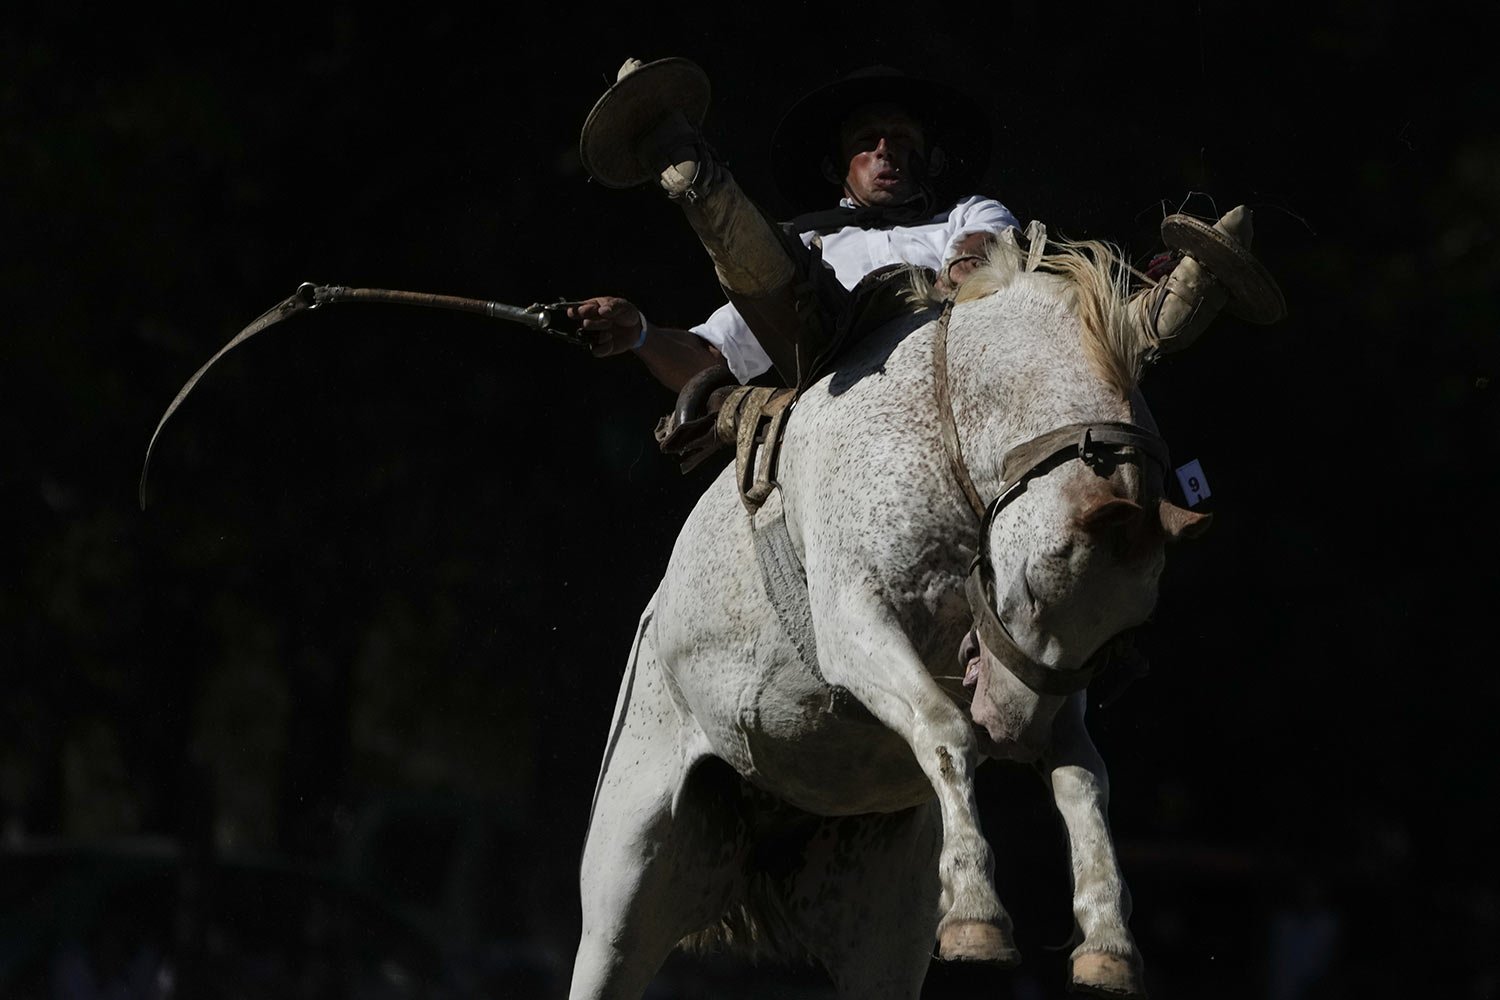  A man rides a bucking horse during a rodeo in Chascomus, Argentina, Sunday, Feb. 26, 2023. (AP Photo/Natacha Pisarenko) 